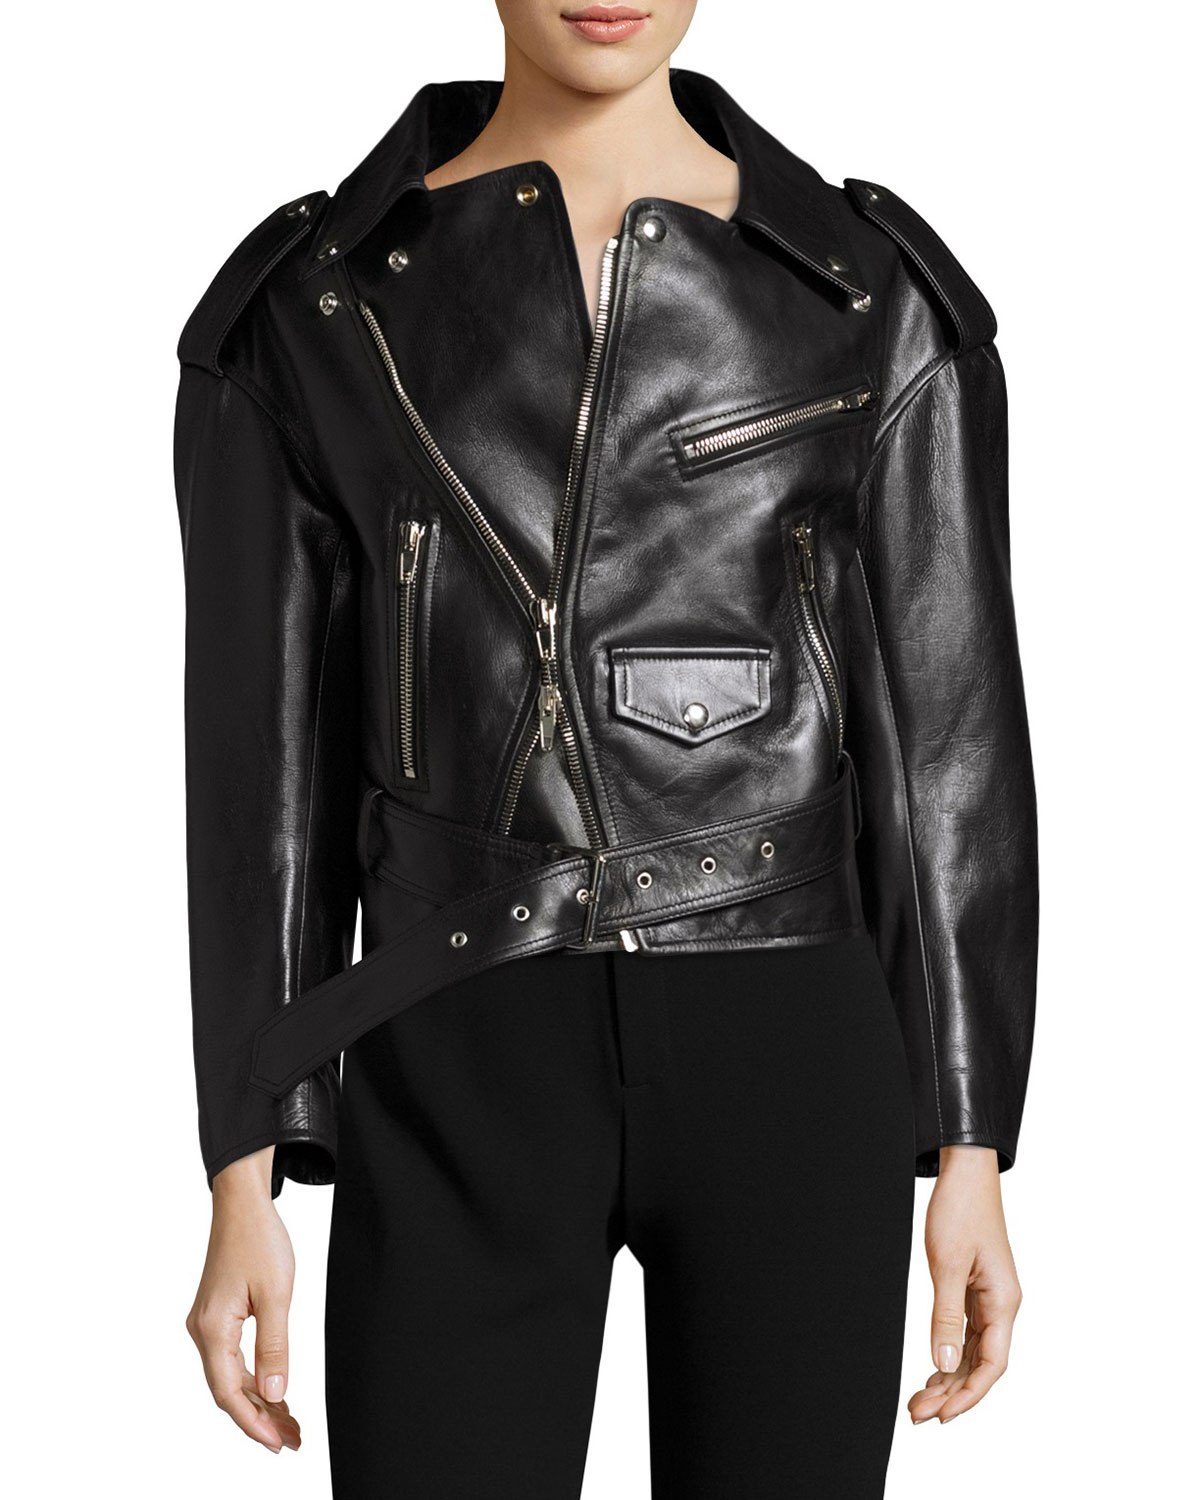 Куртка баленсиага женская. Balenciaga Leather Jacket. Balenciaga 2020 Calf Leather Biker Jacket. Косуха Баленсиага. Кожаная куртка Баленсиага.